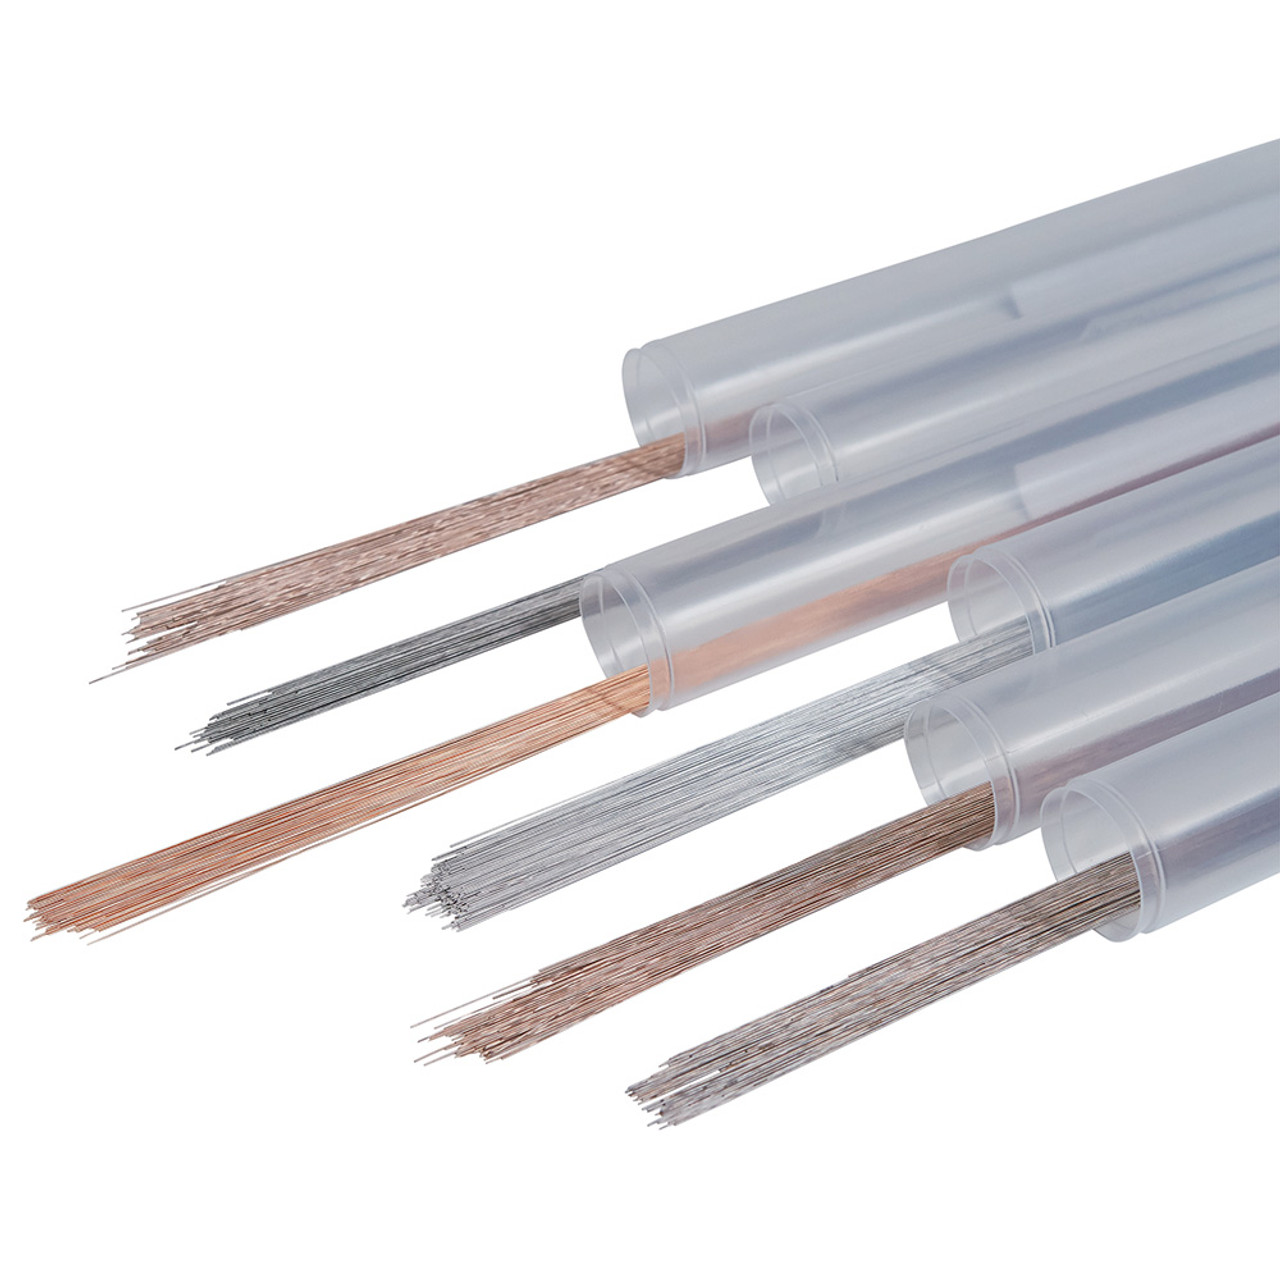 Laser Welding Wires - S-7, 0.5mm pkg. of 25 grams = approx. 50 wires